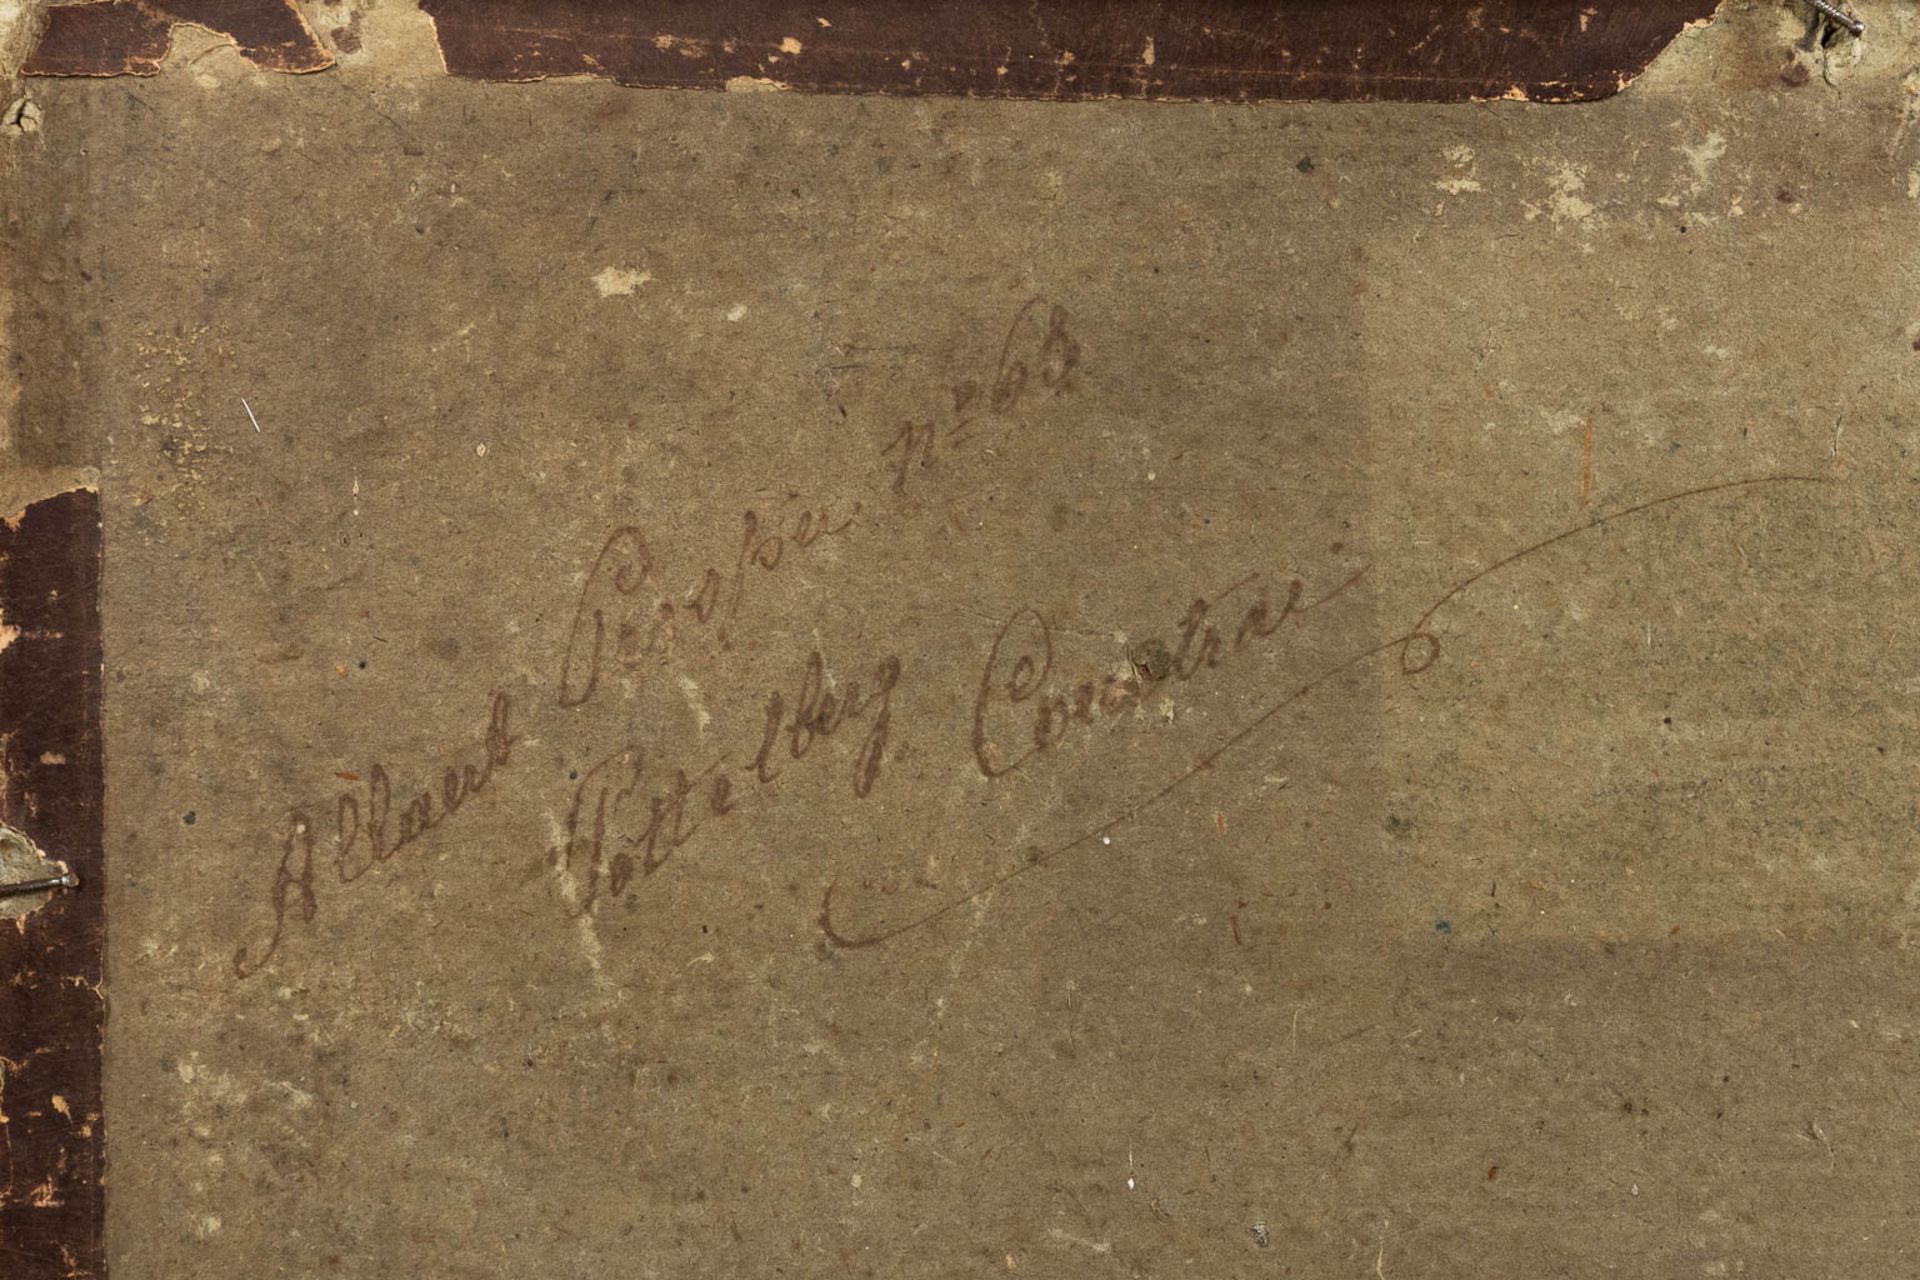 Edouard WOUTERMAERTENS (1819-1897) 'Ram' oil on board. (W: 38 x H: 30 cm) - Image 7 of 7